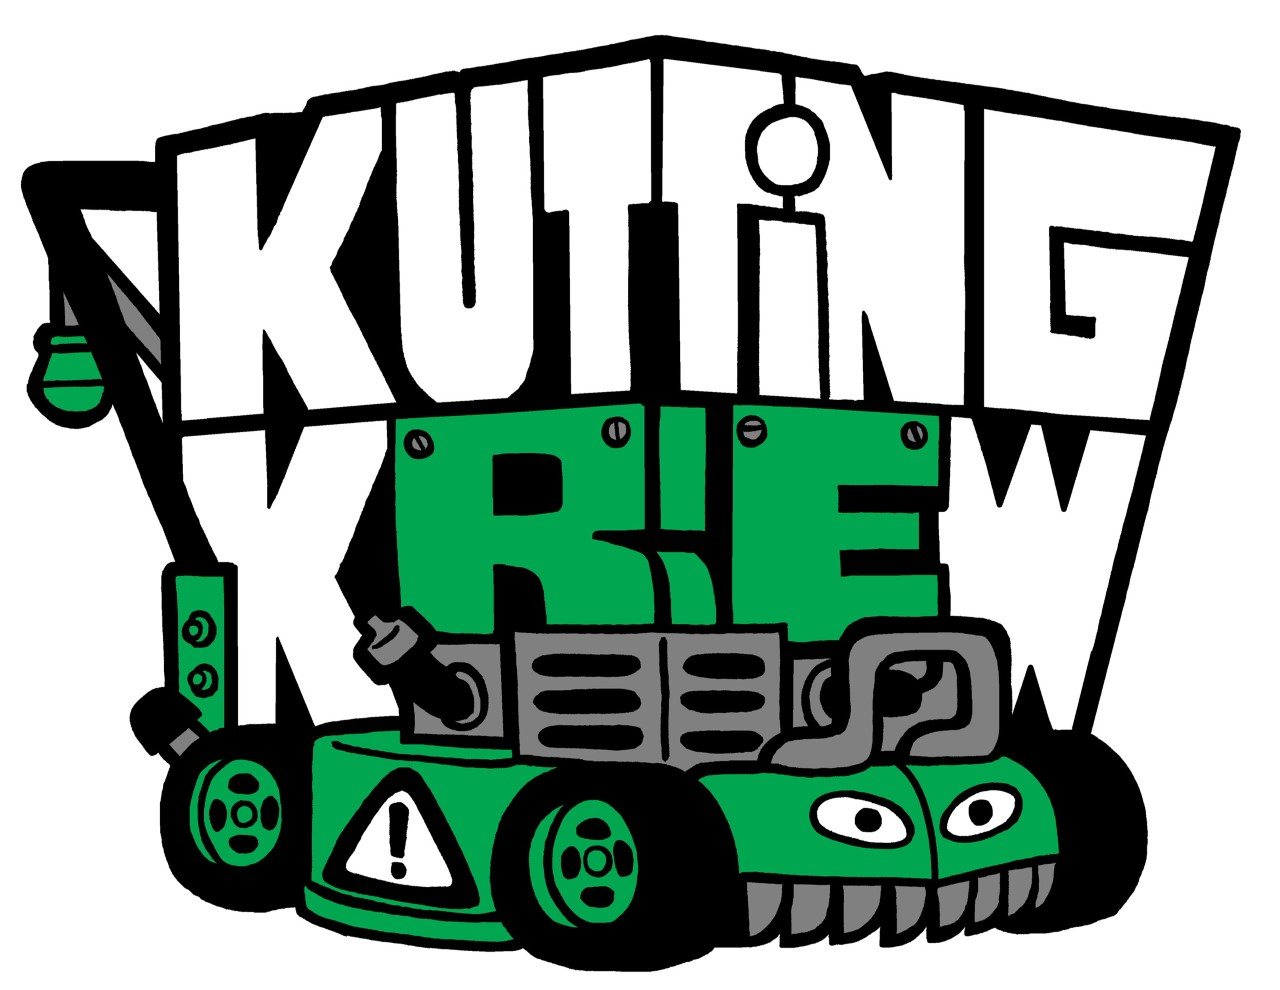 The Kutting Krew